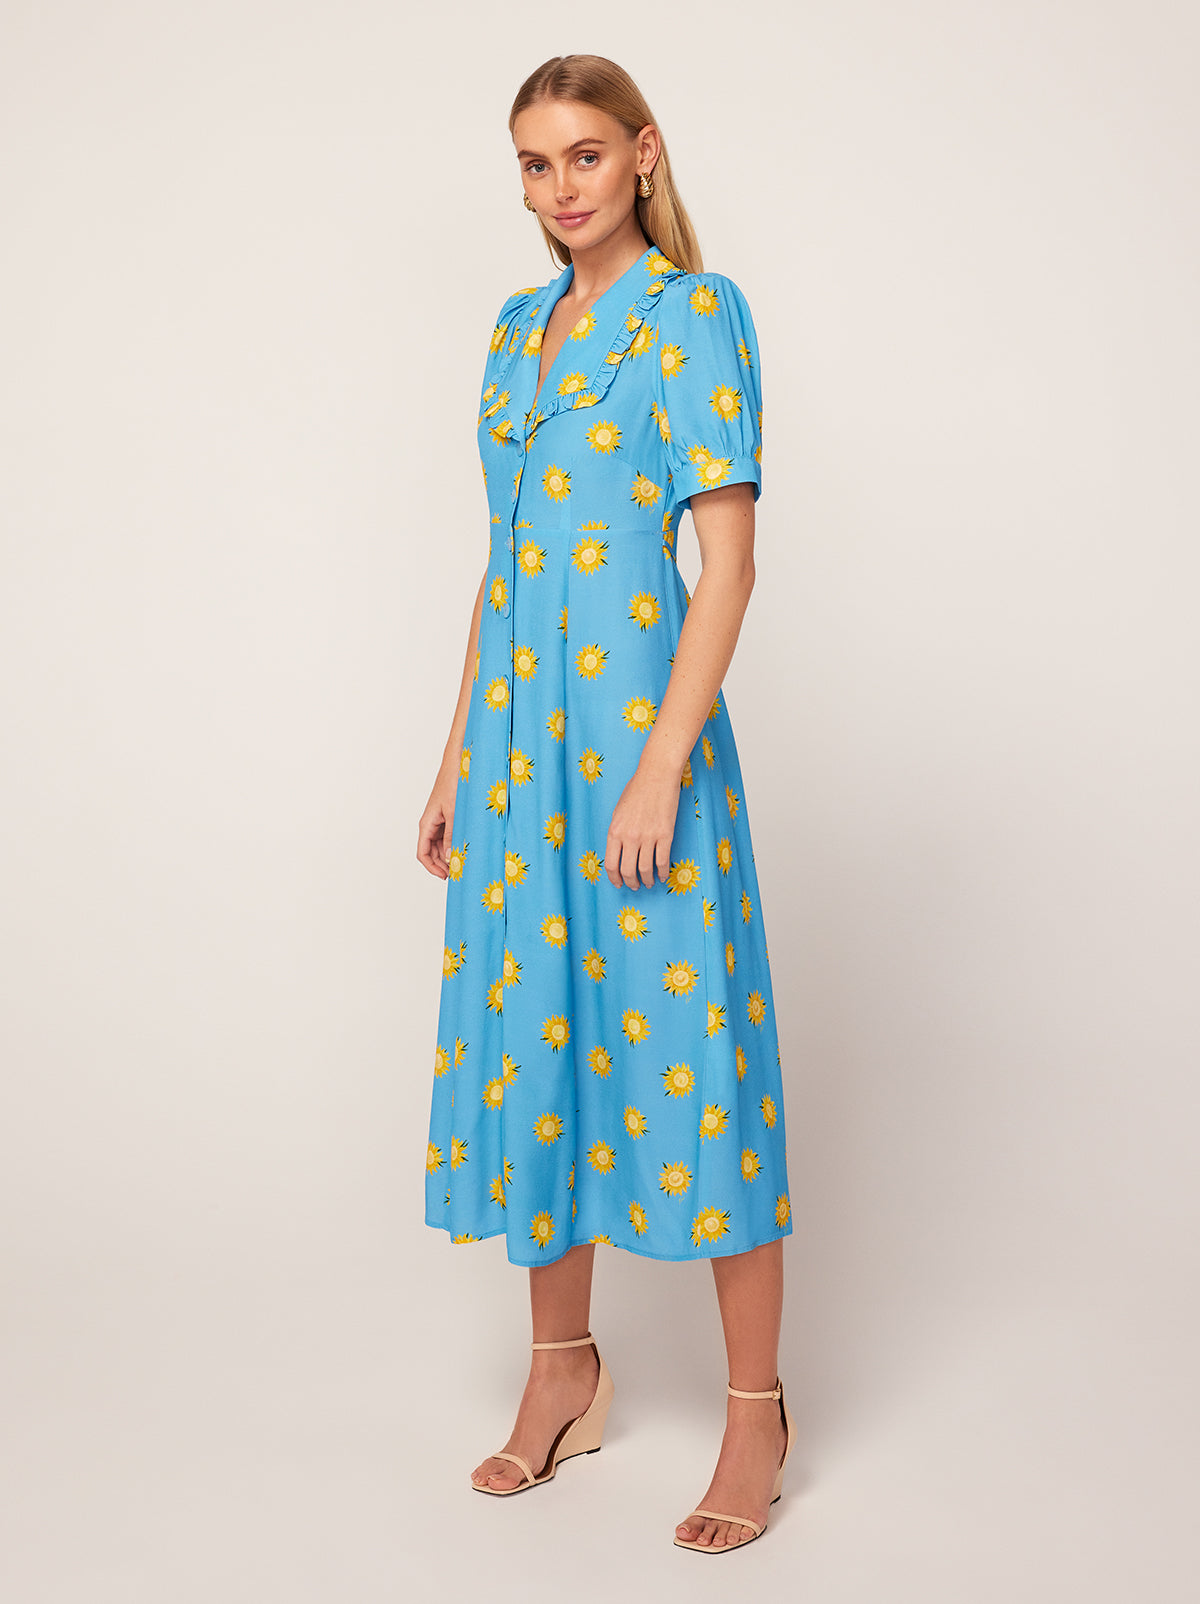 Bethany Blue Sunflower Print Tea Dress By KITRI Studio